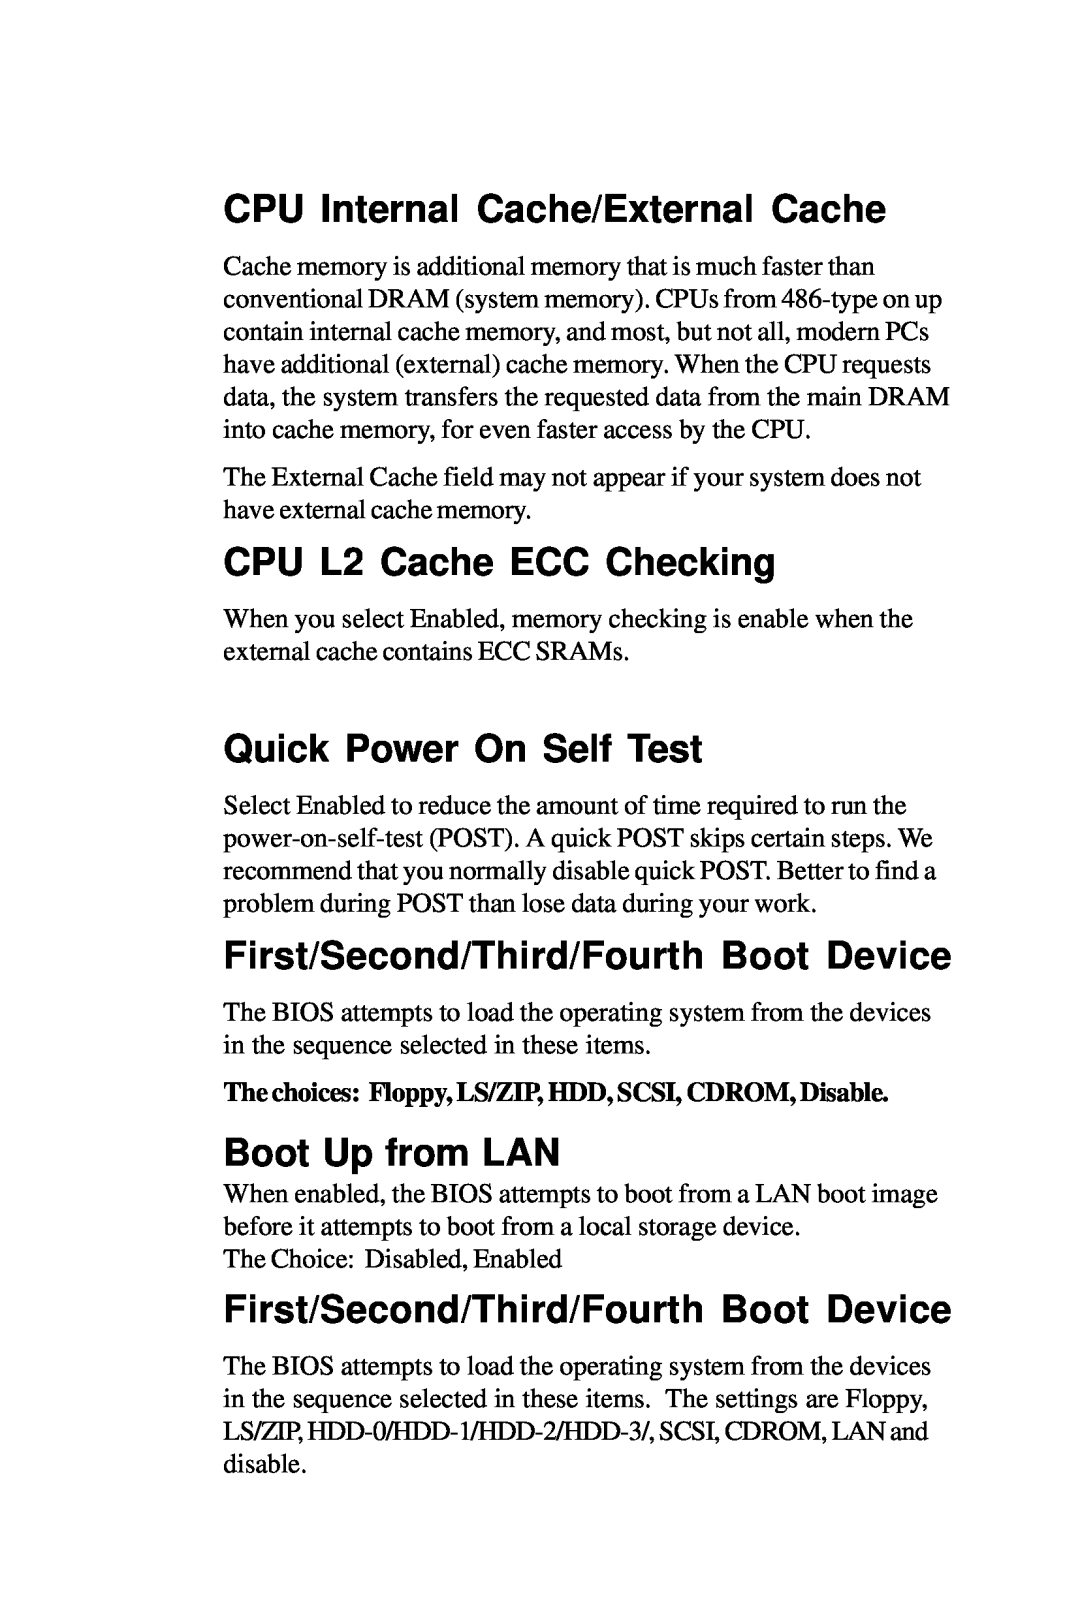 Intel PCM-6896 CPU Internal Cache/External Cache, CPU L2 Cache ECC Checking, Quick Power On Self Test, Boot Up from LAN 